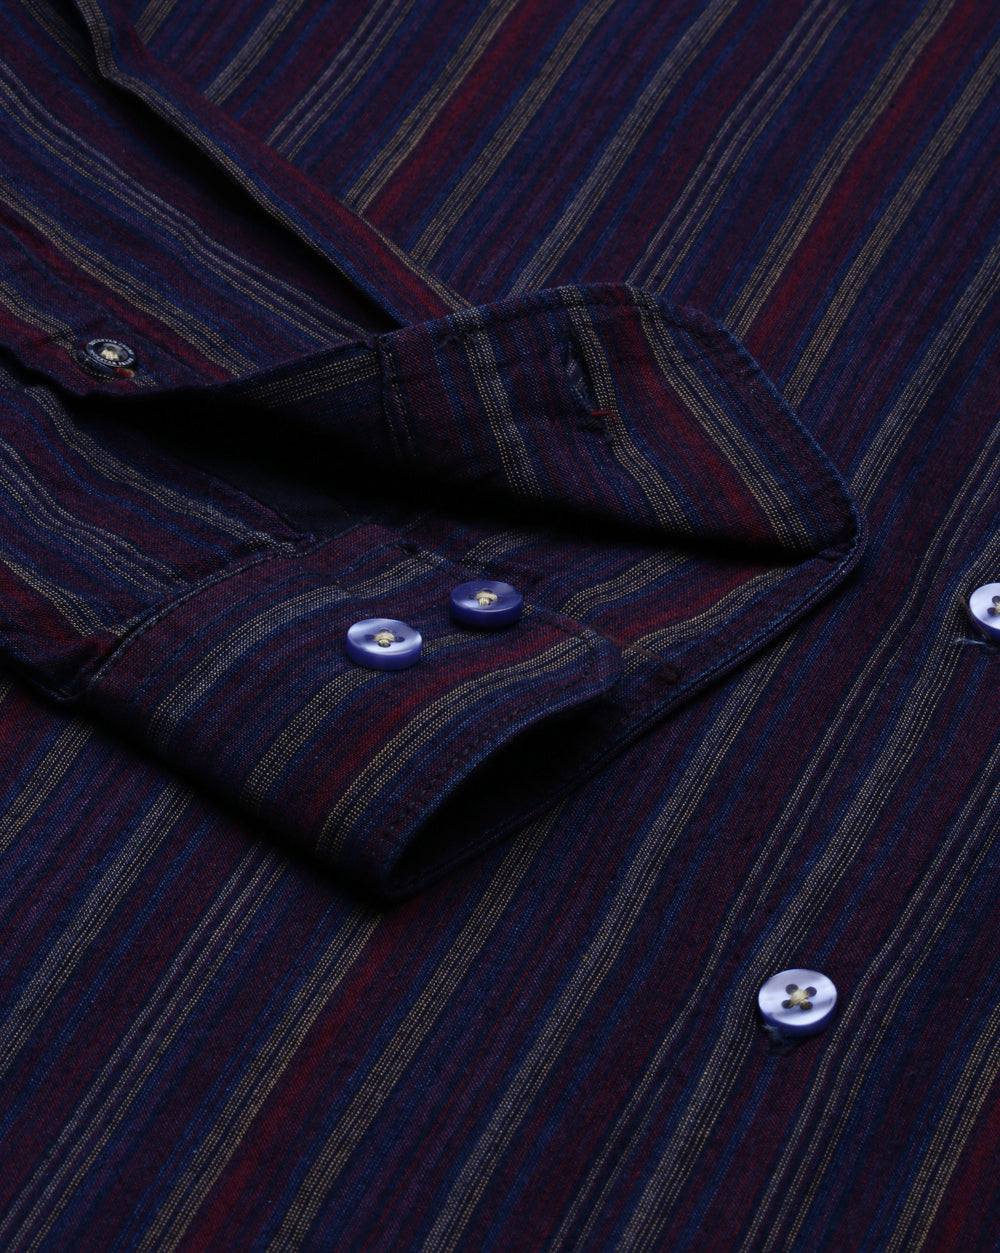 Multi-Colour Stripes Shirt for Men 